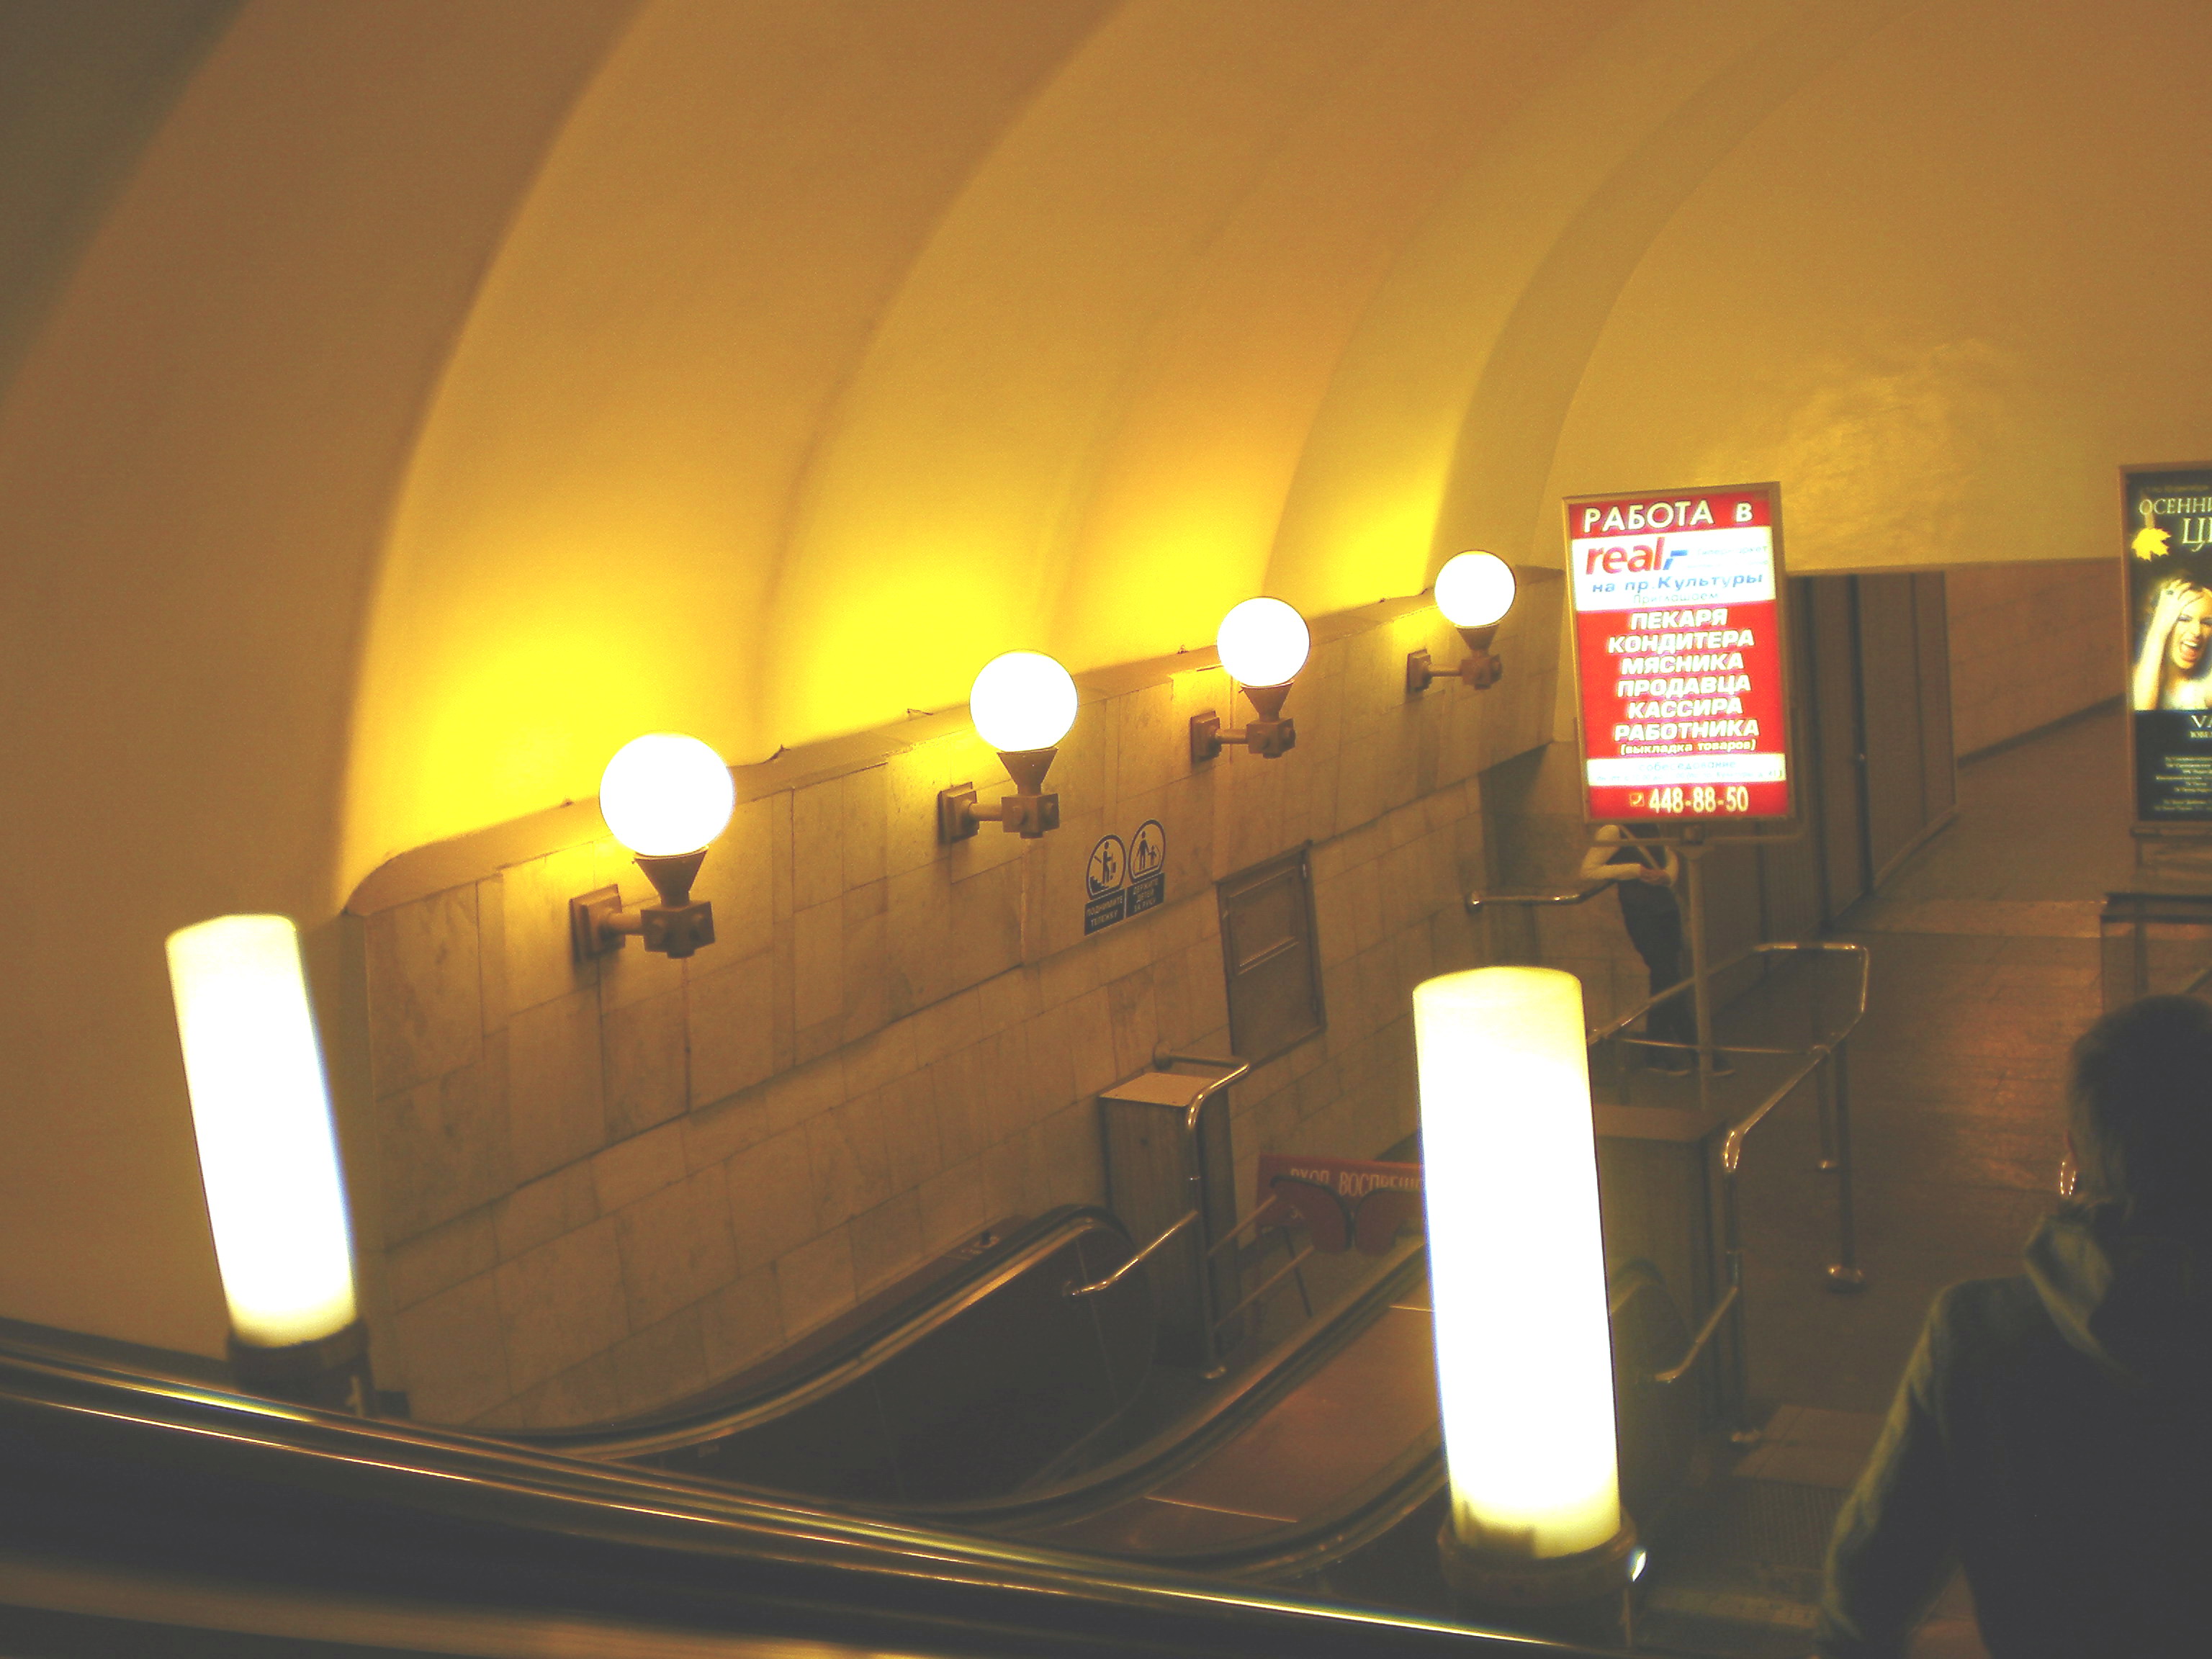 Prosveschenie metrostation - Down Escalator hall